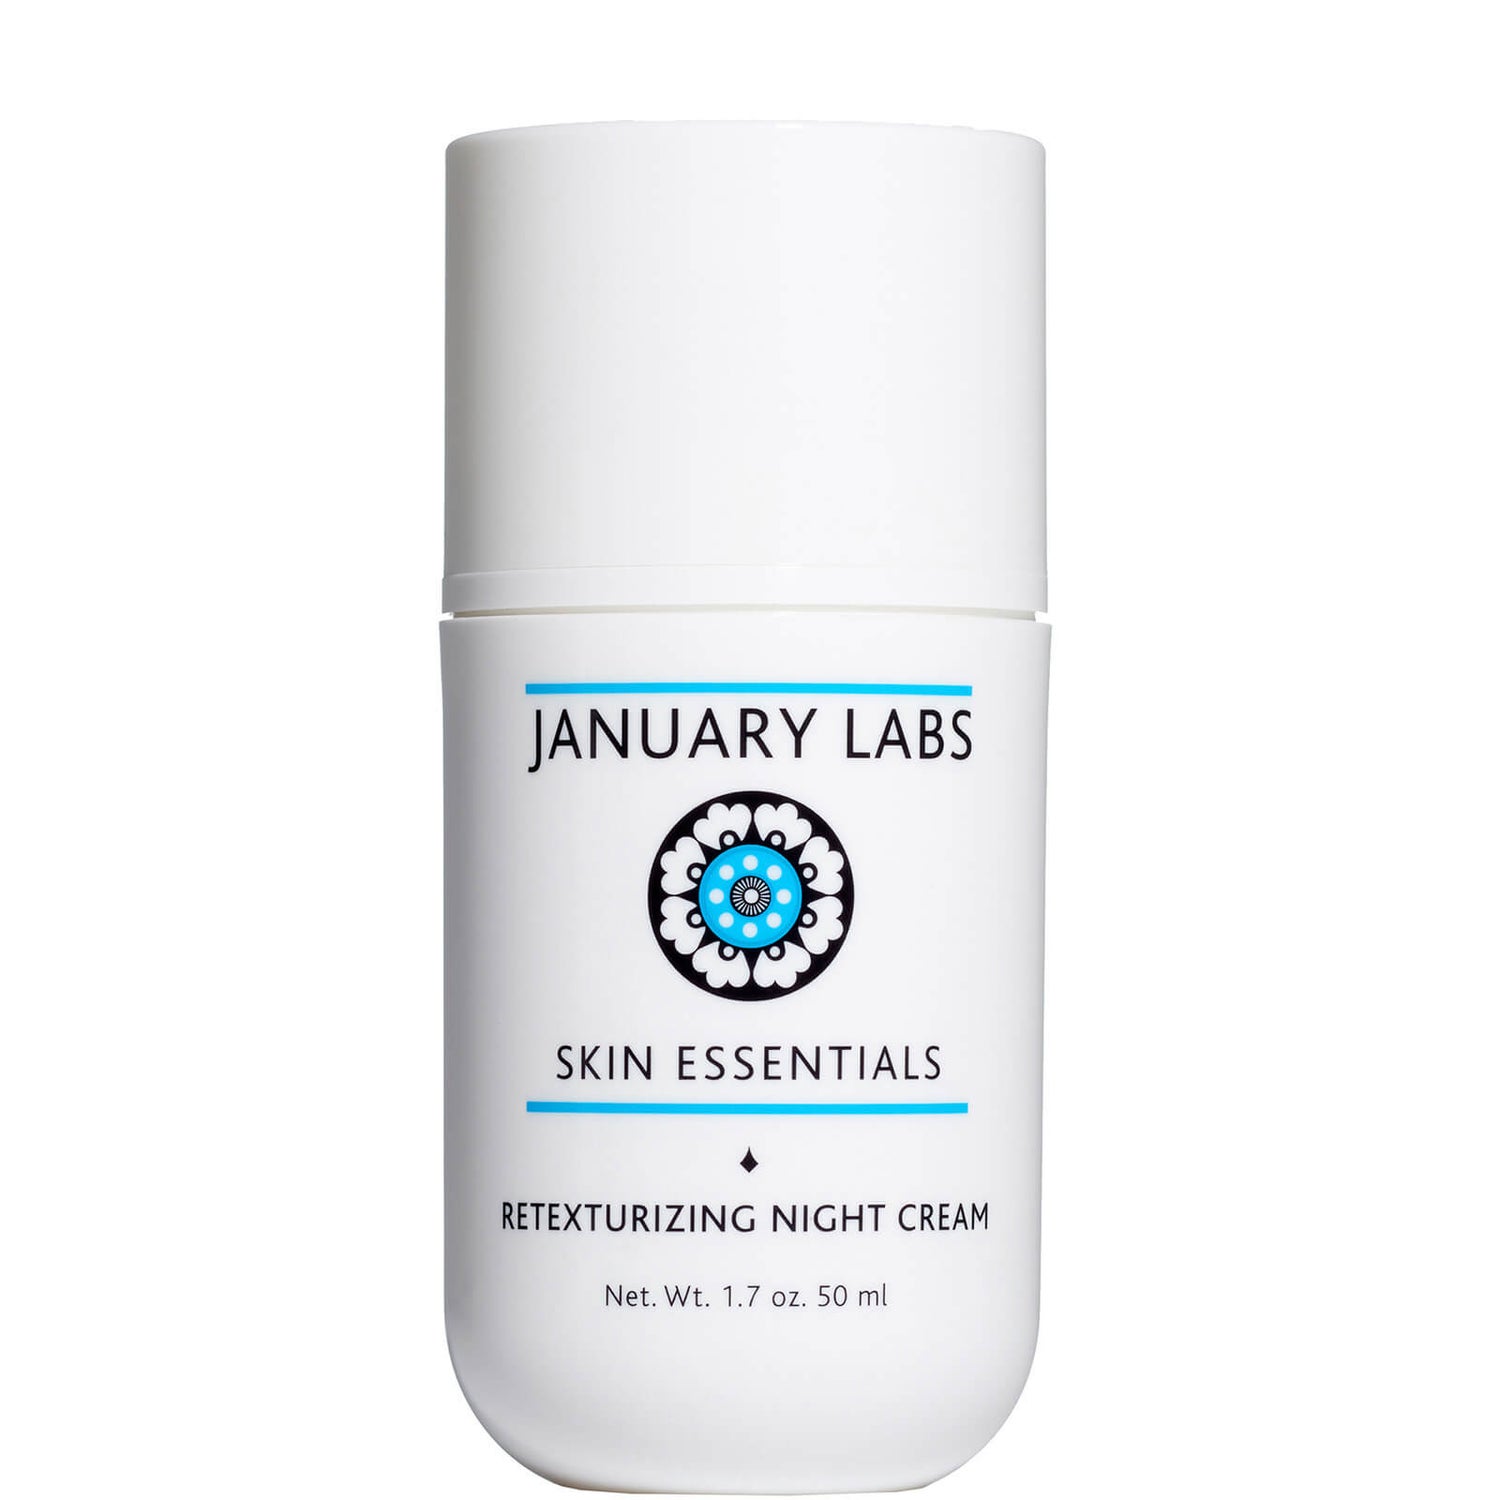 January Labs Retexturizing Night Cream